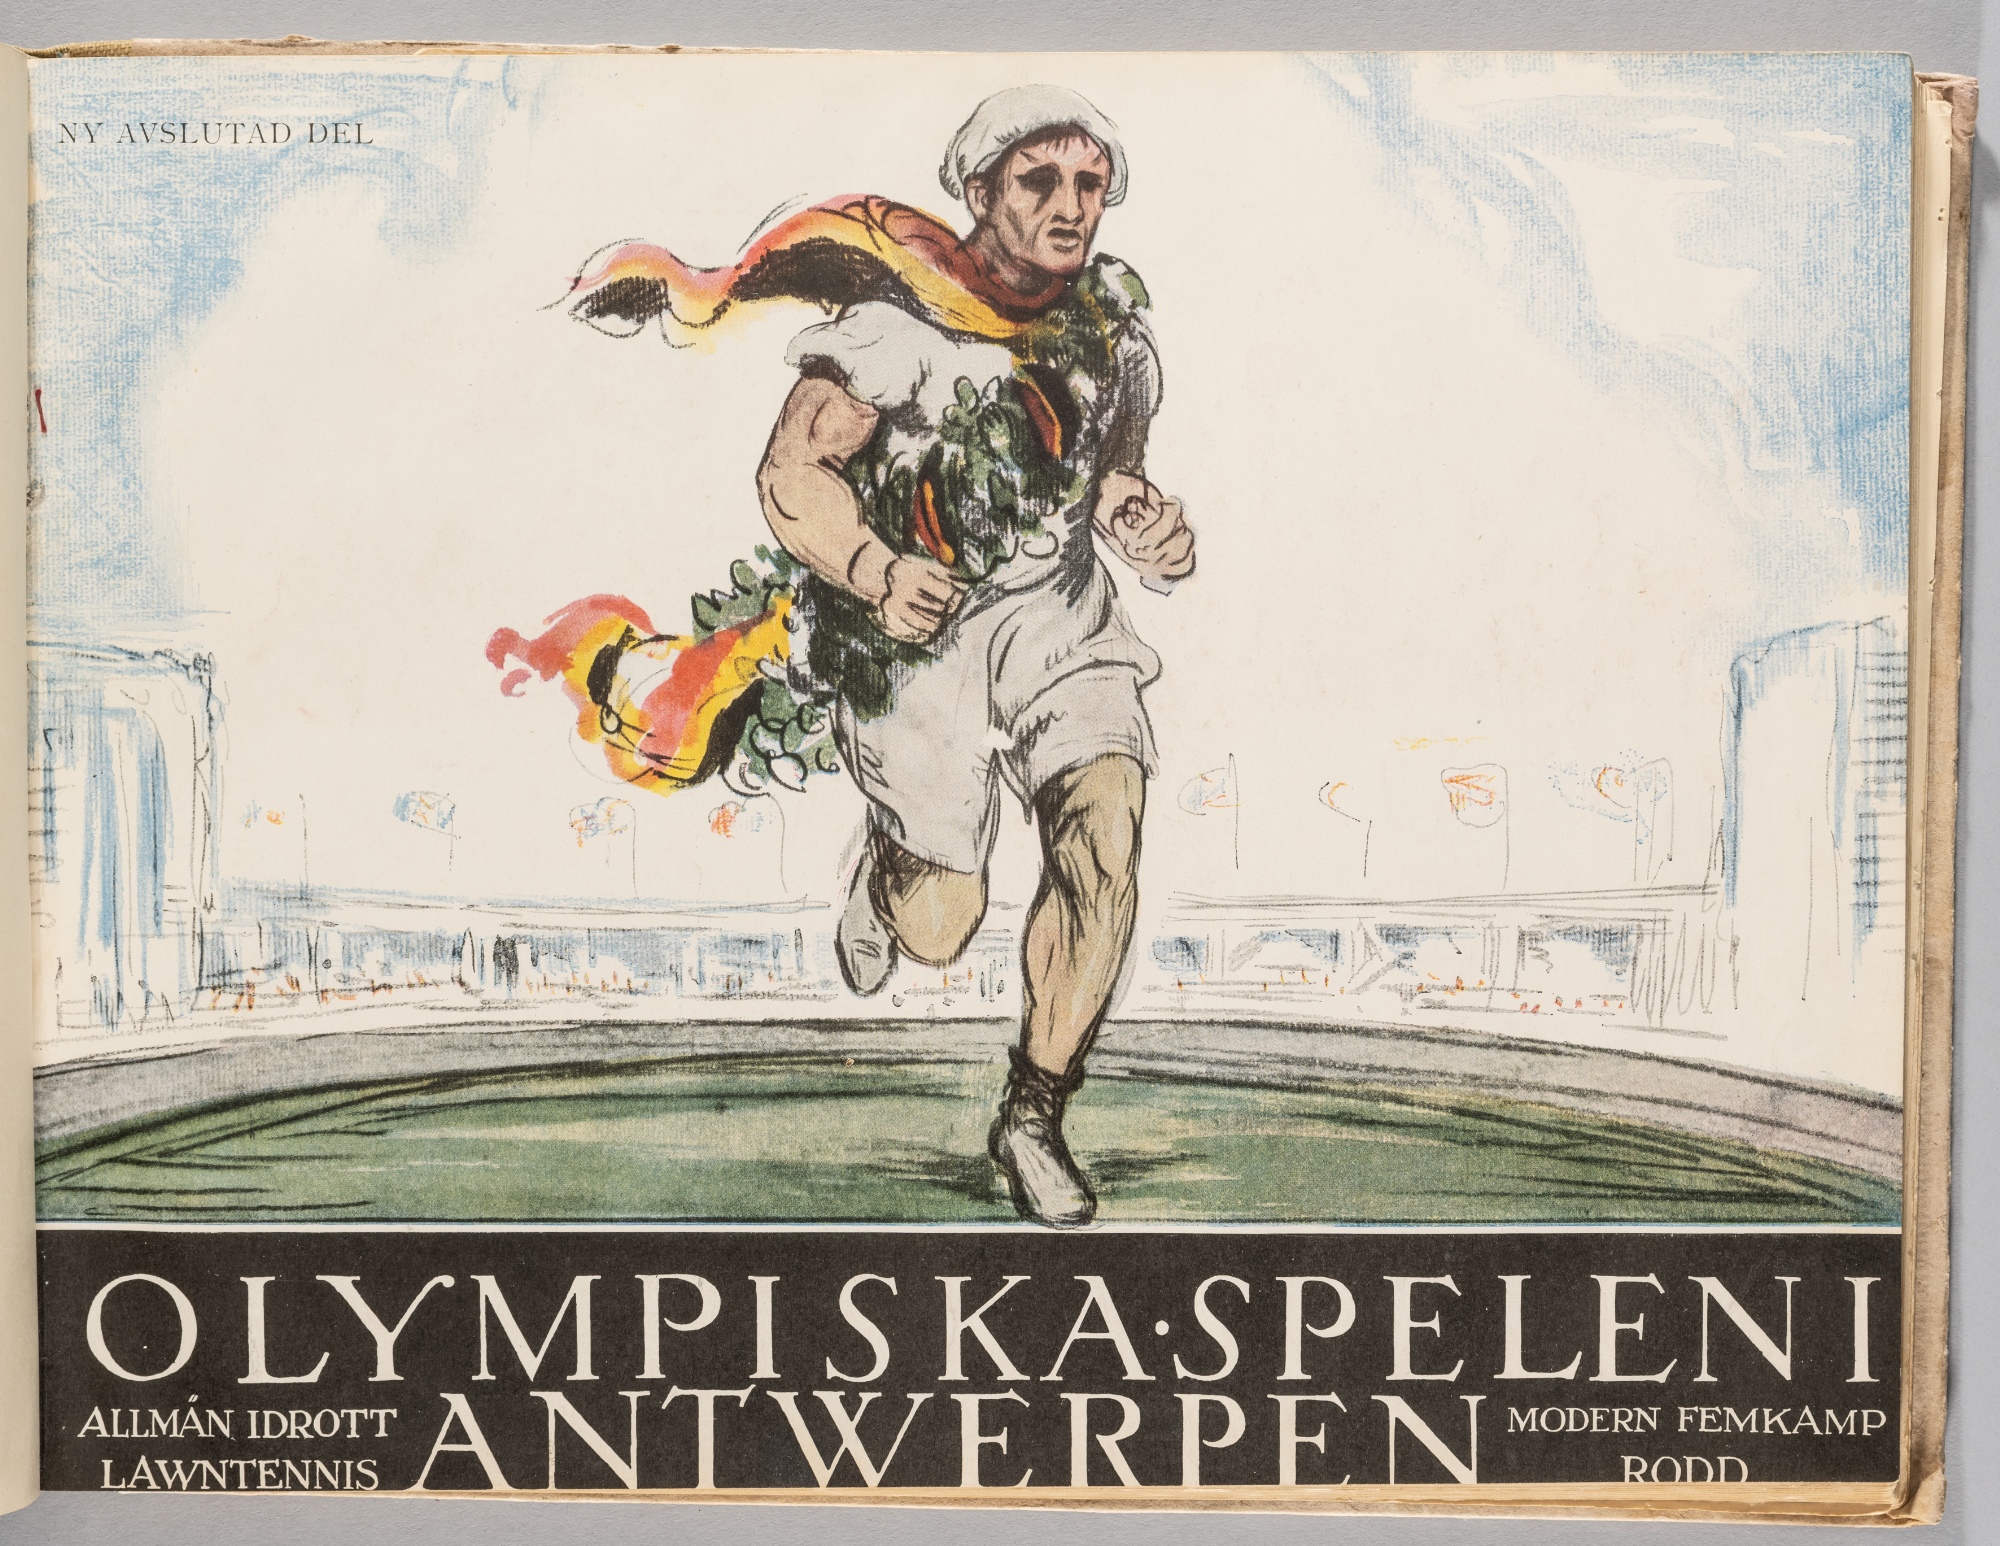 Antwerp 1920 Olympic Games "Olympiska Spelen Antwerpen 1920", hardback, 160-page, published by Ahlen - Image 3 of 5